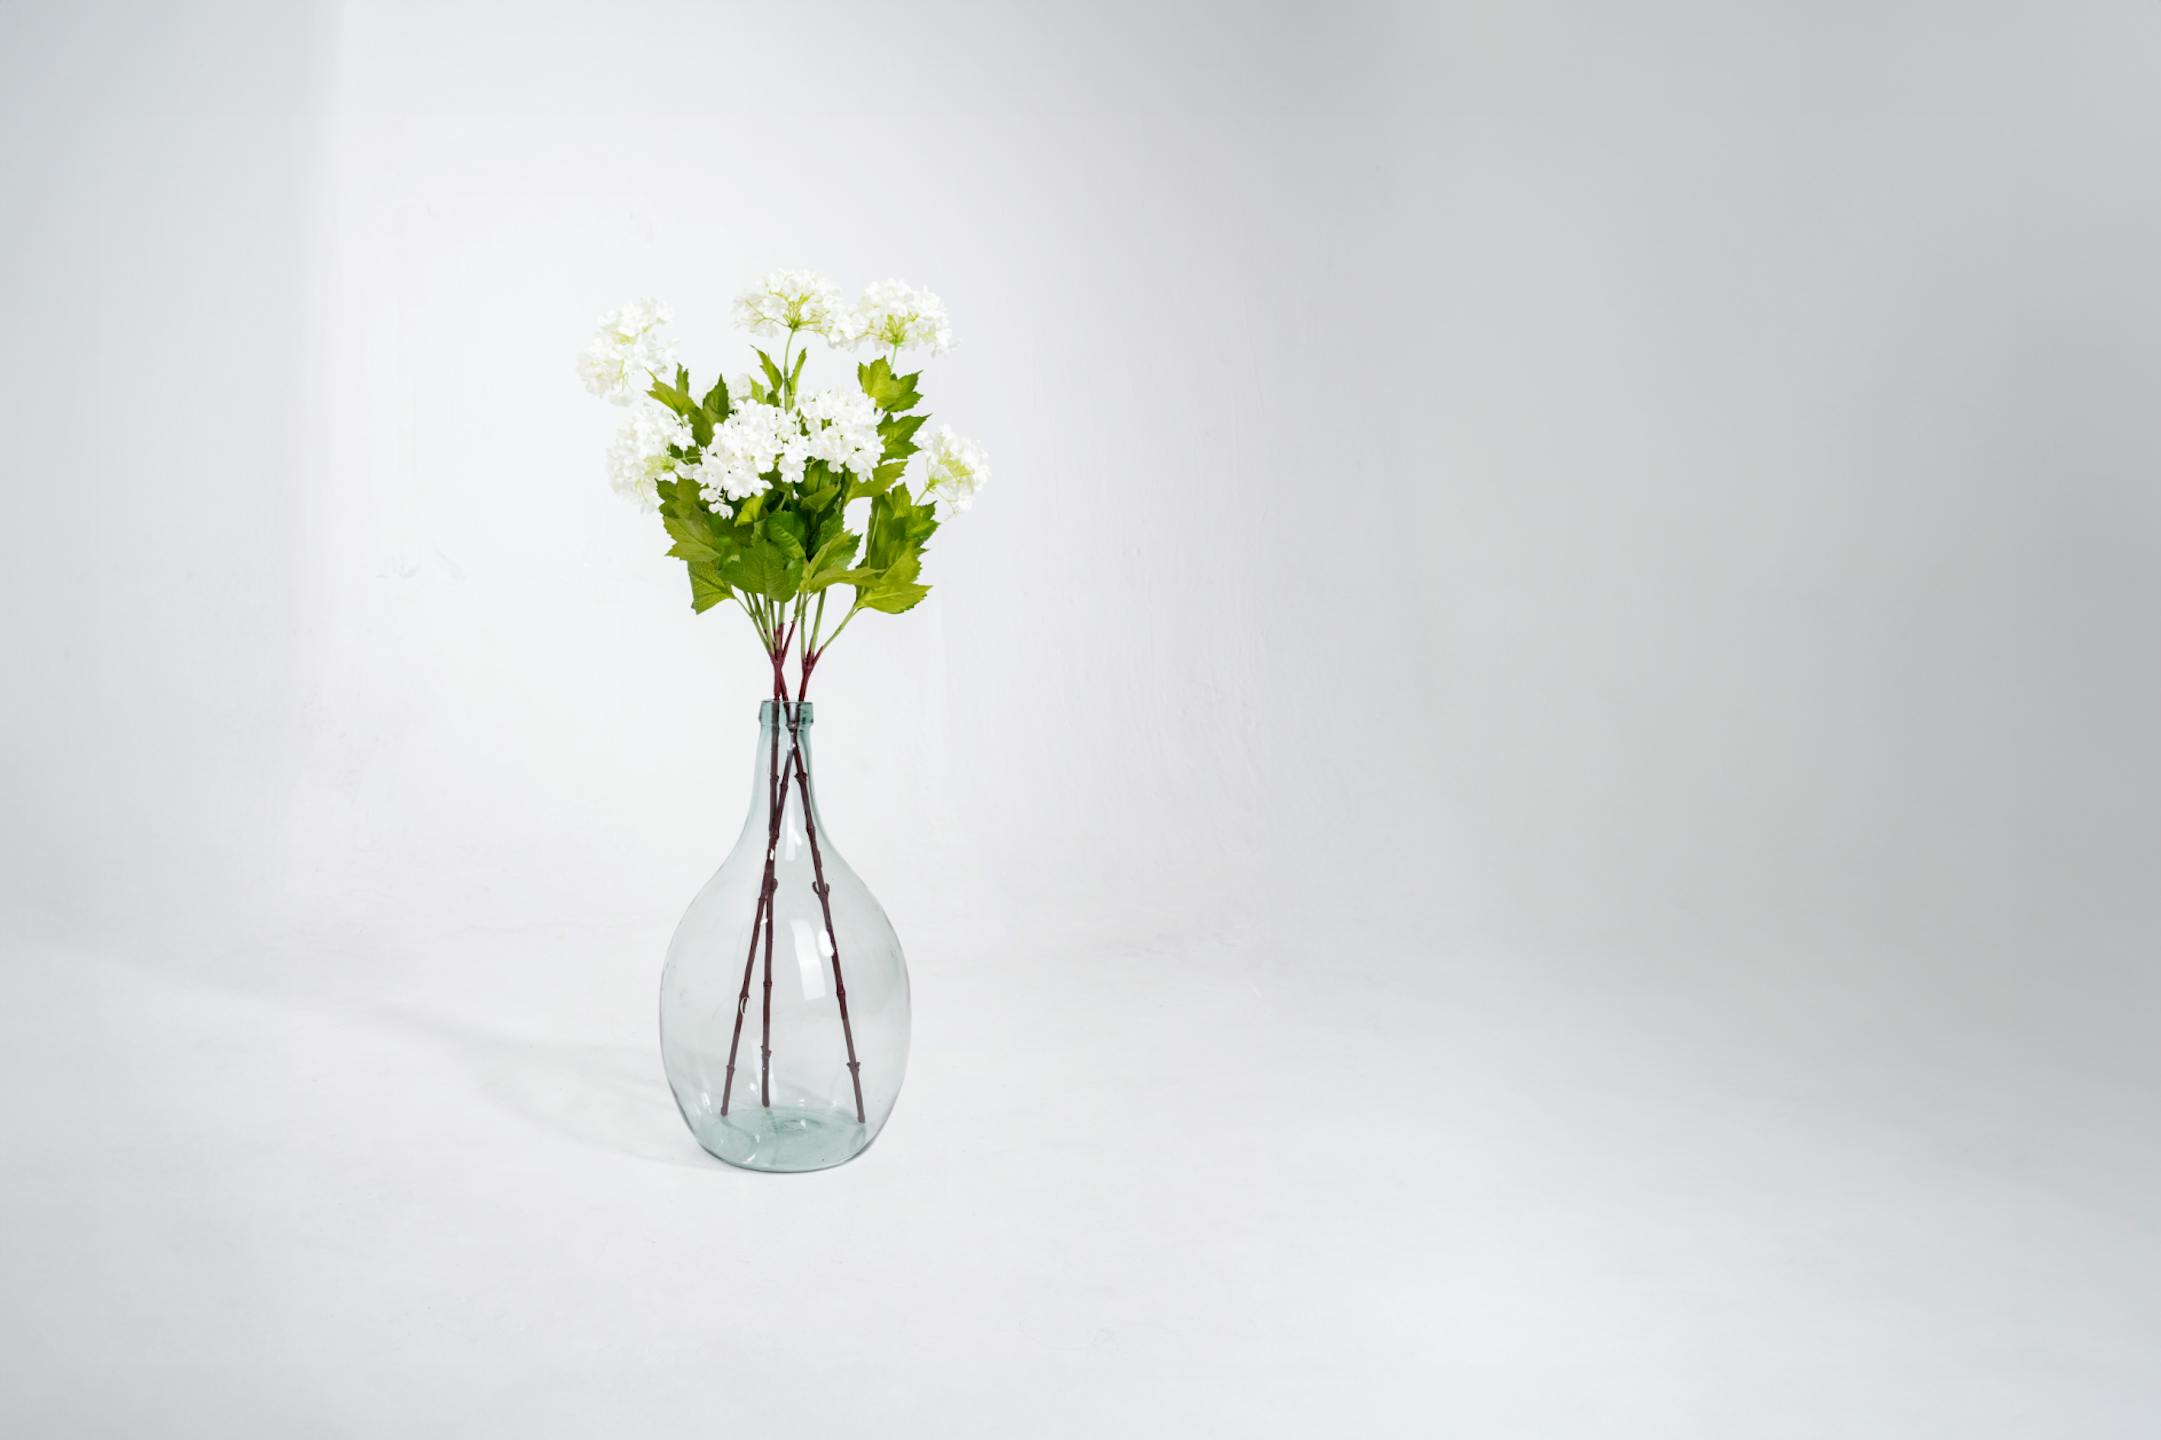 Three white artificial viburnum stems in glass vase